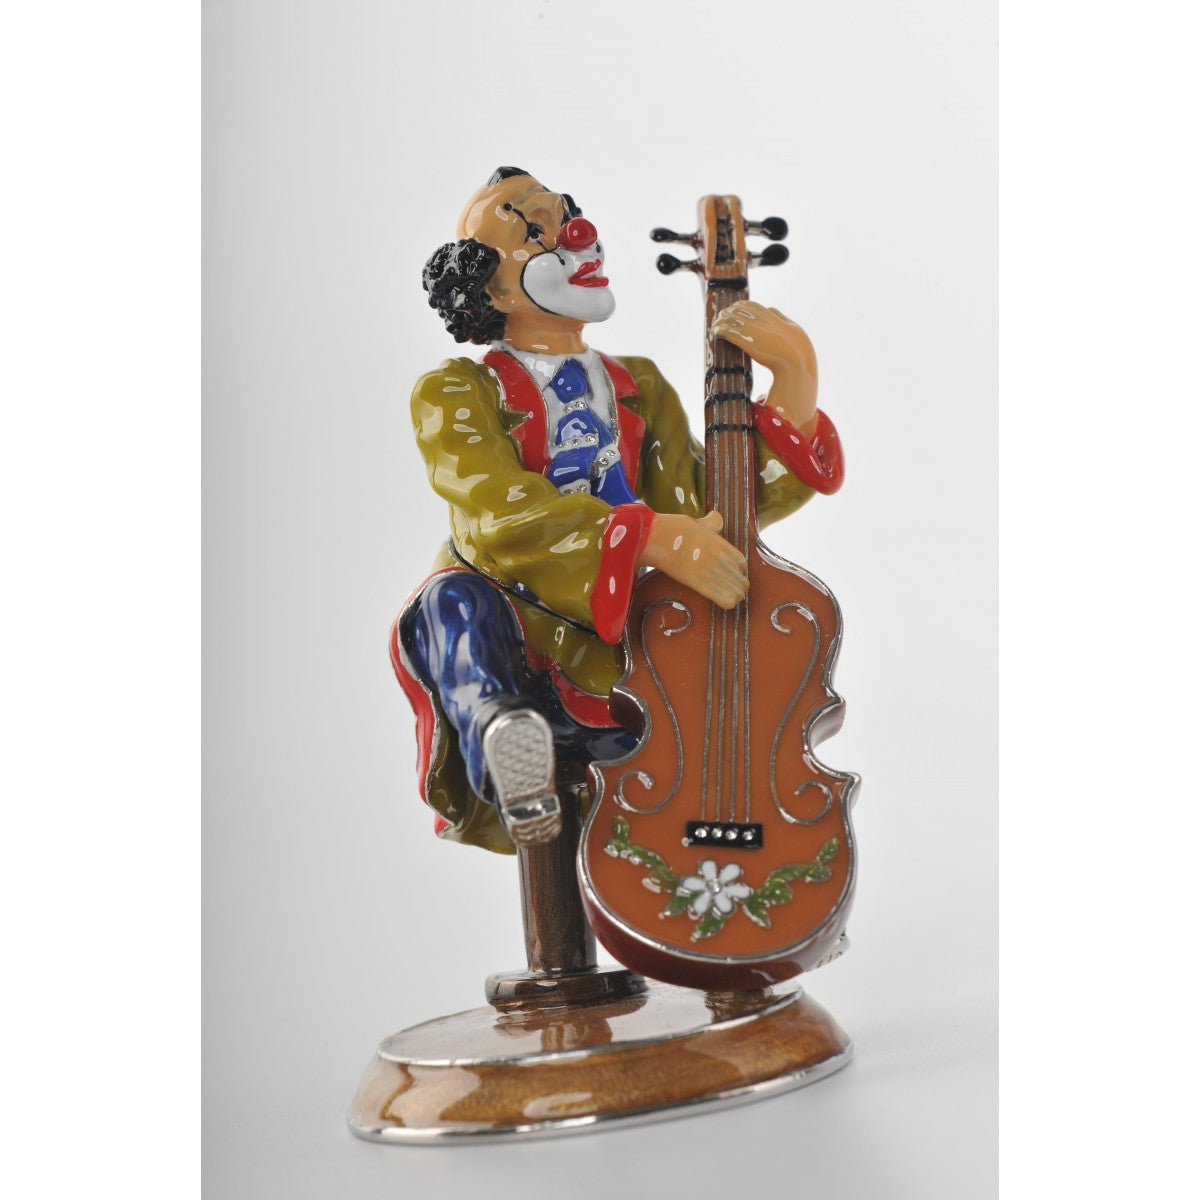 Circus Clown playing cello by Keren Kopal